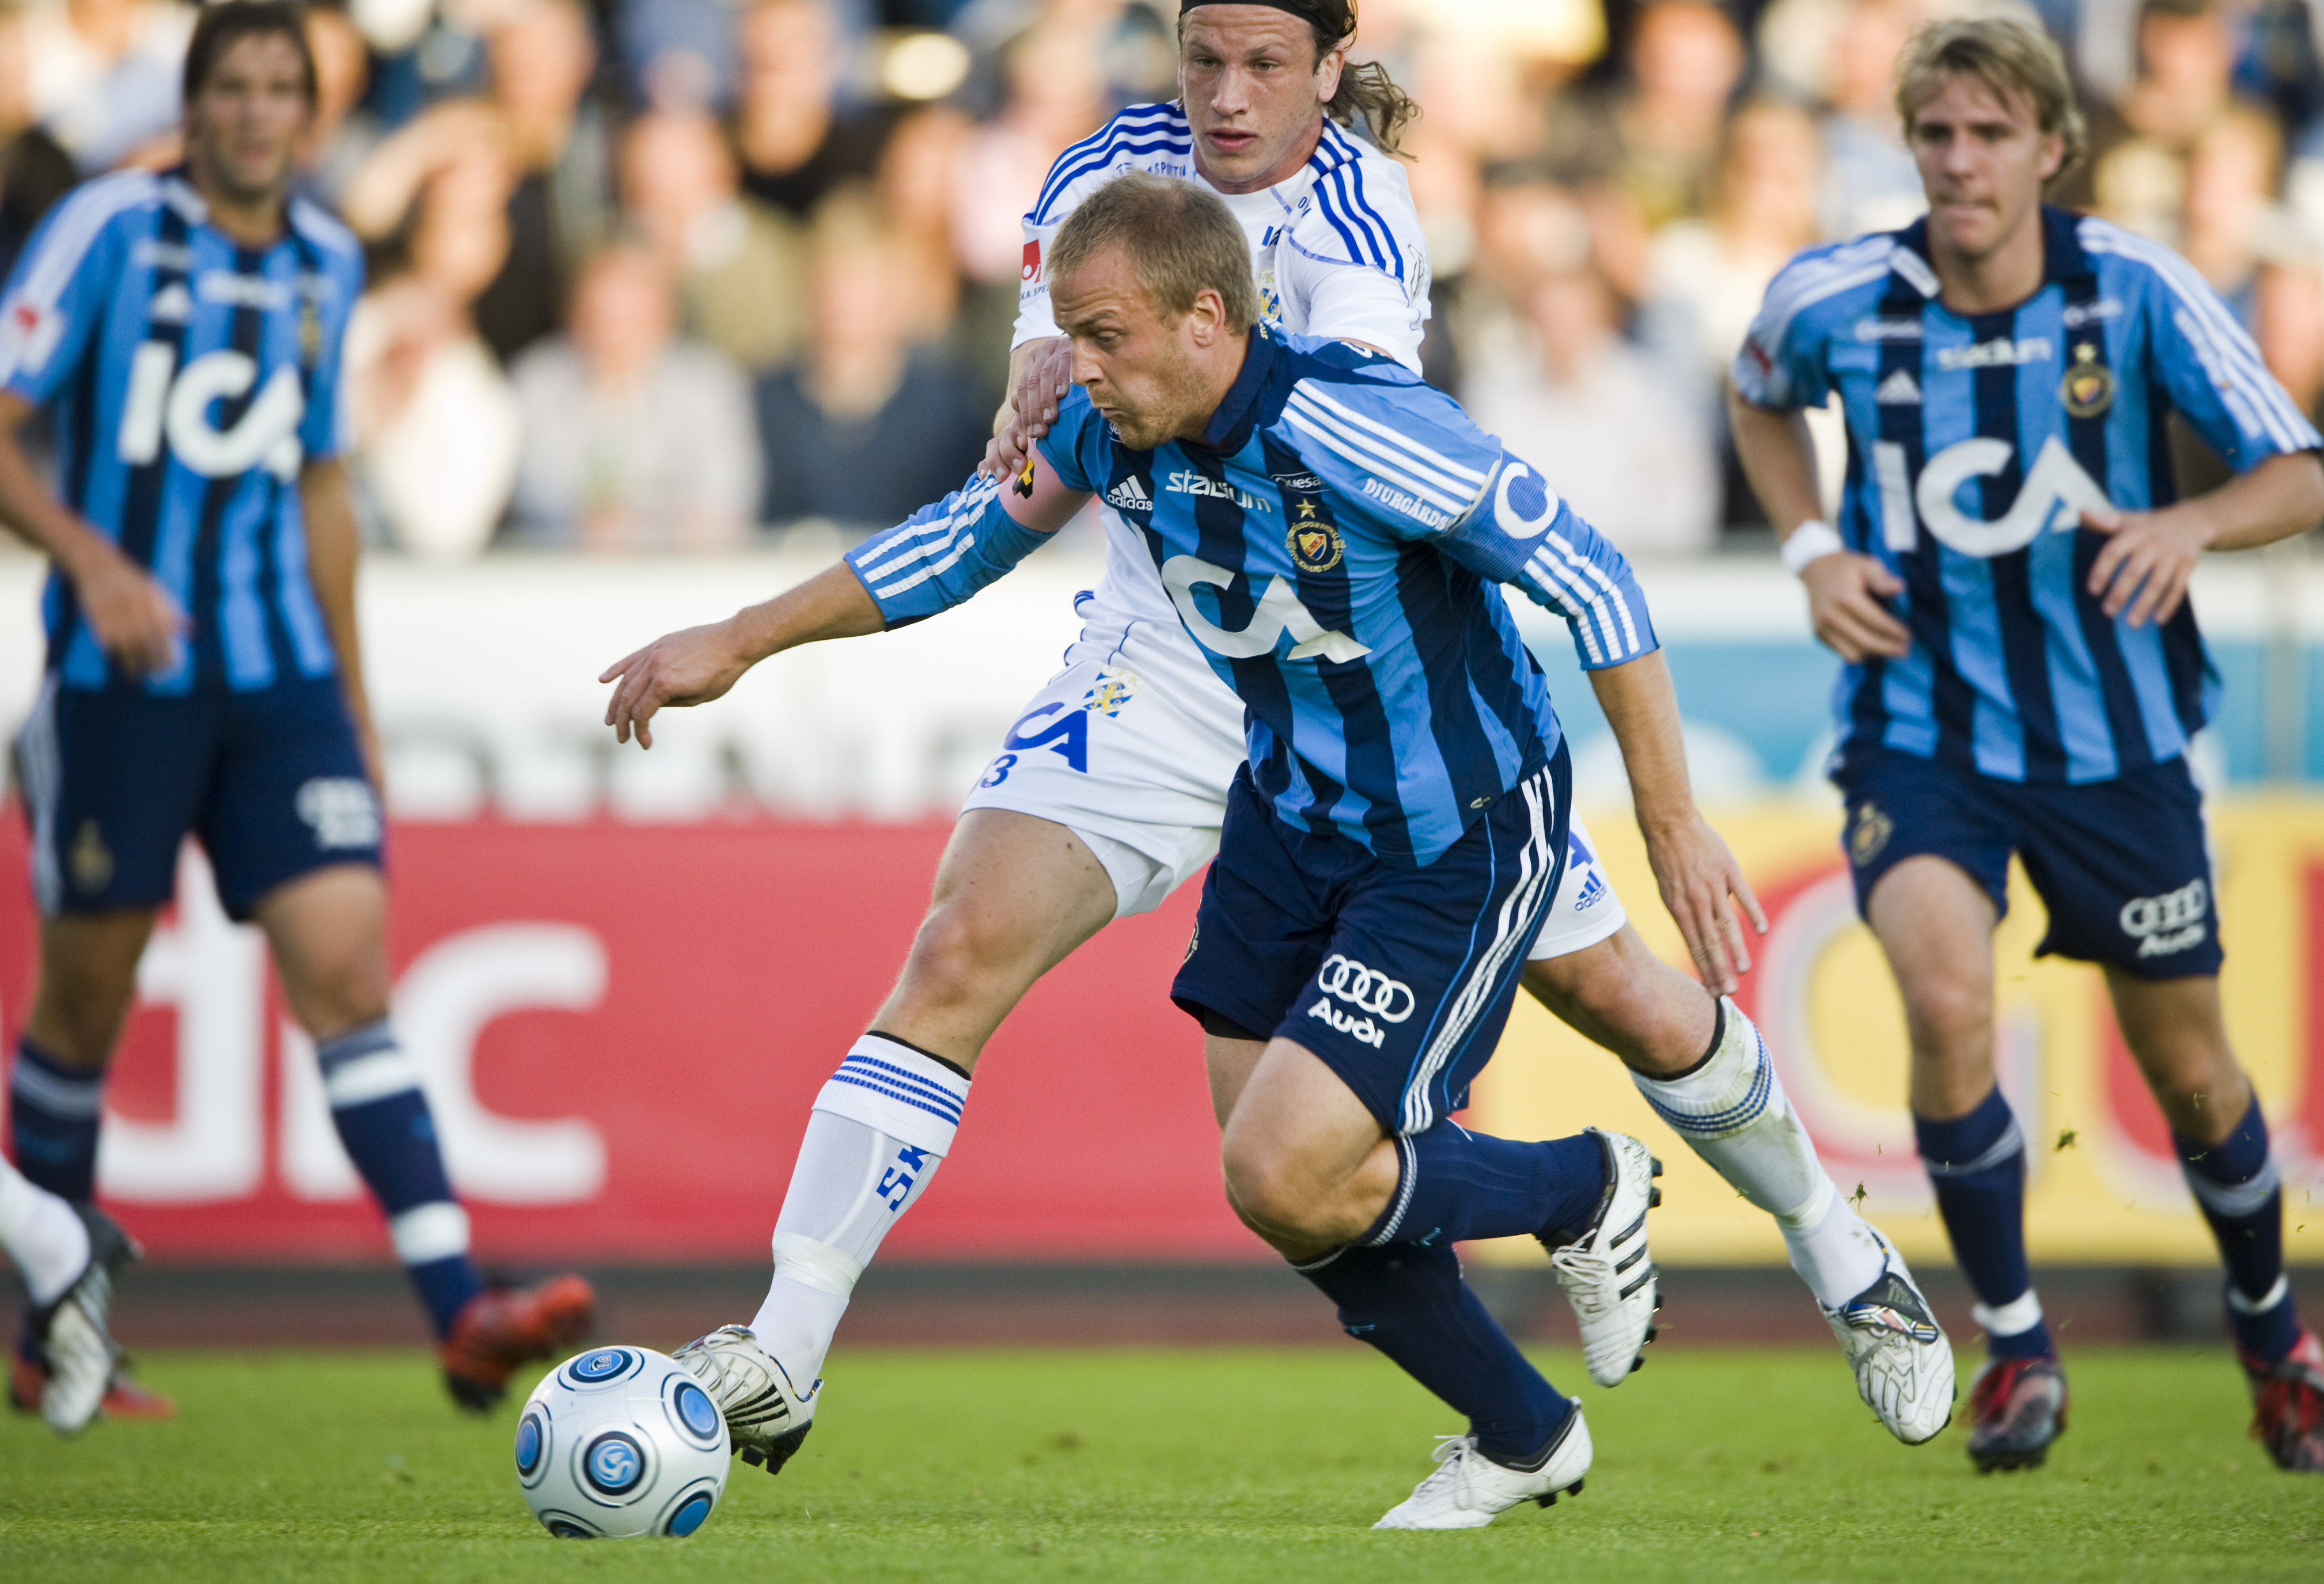 Stefan Pettersson, Allsvenskan, Dif